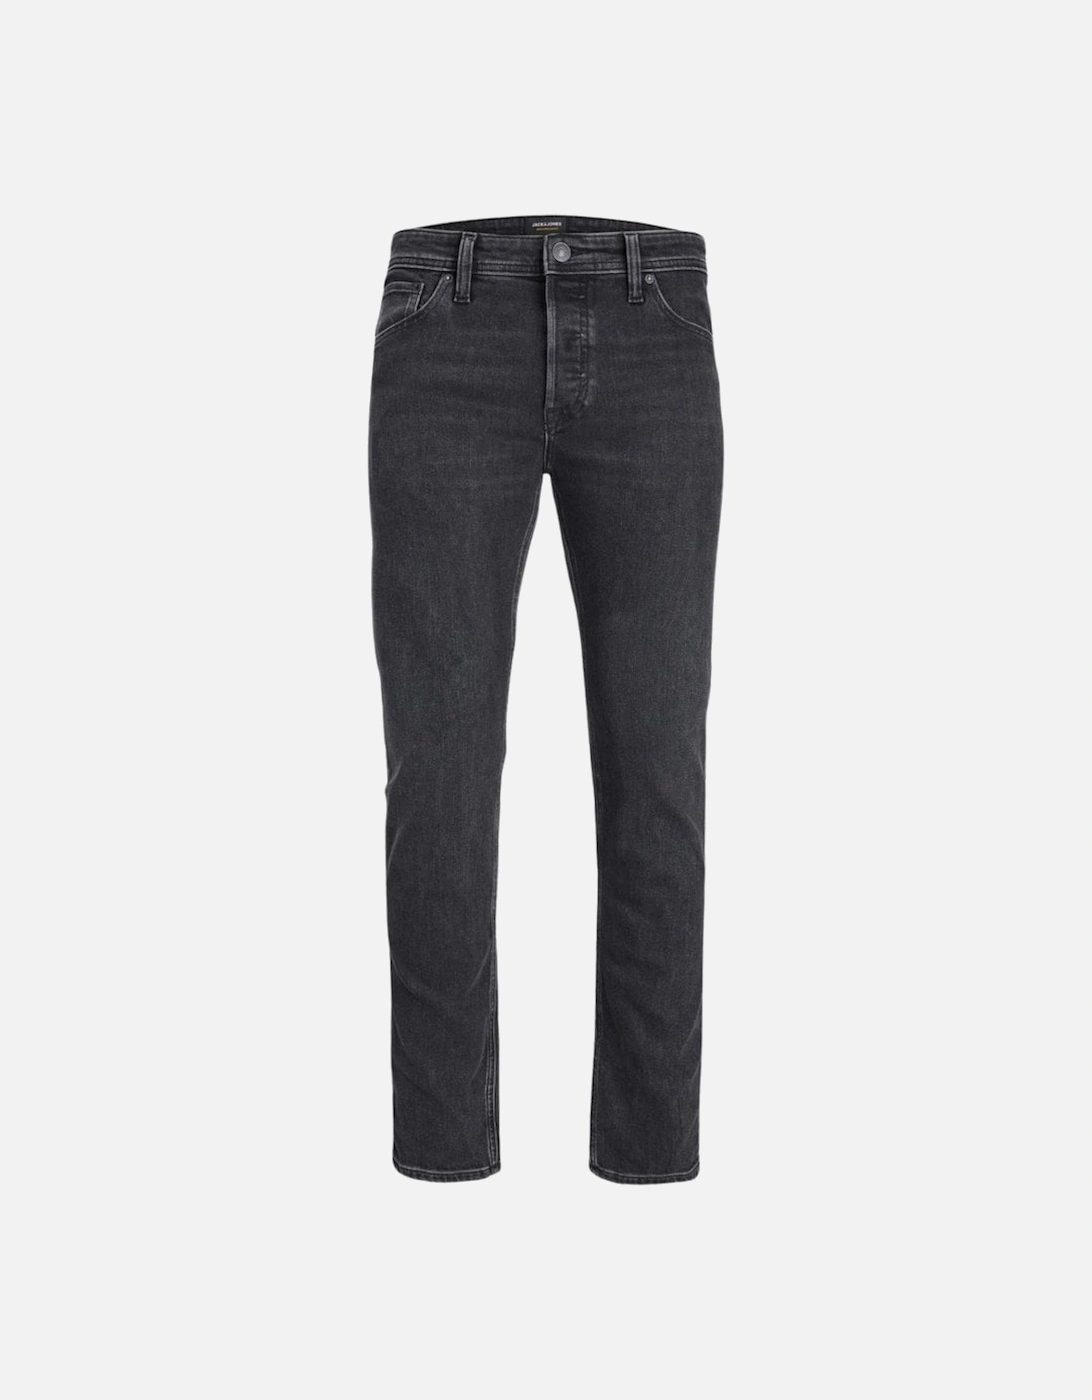 Mike Original 389 Comfort Fit Jeans - Washed Black, 8 of 7